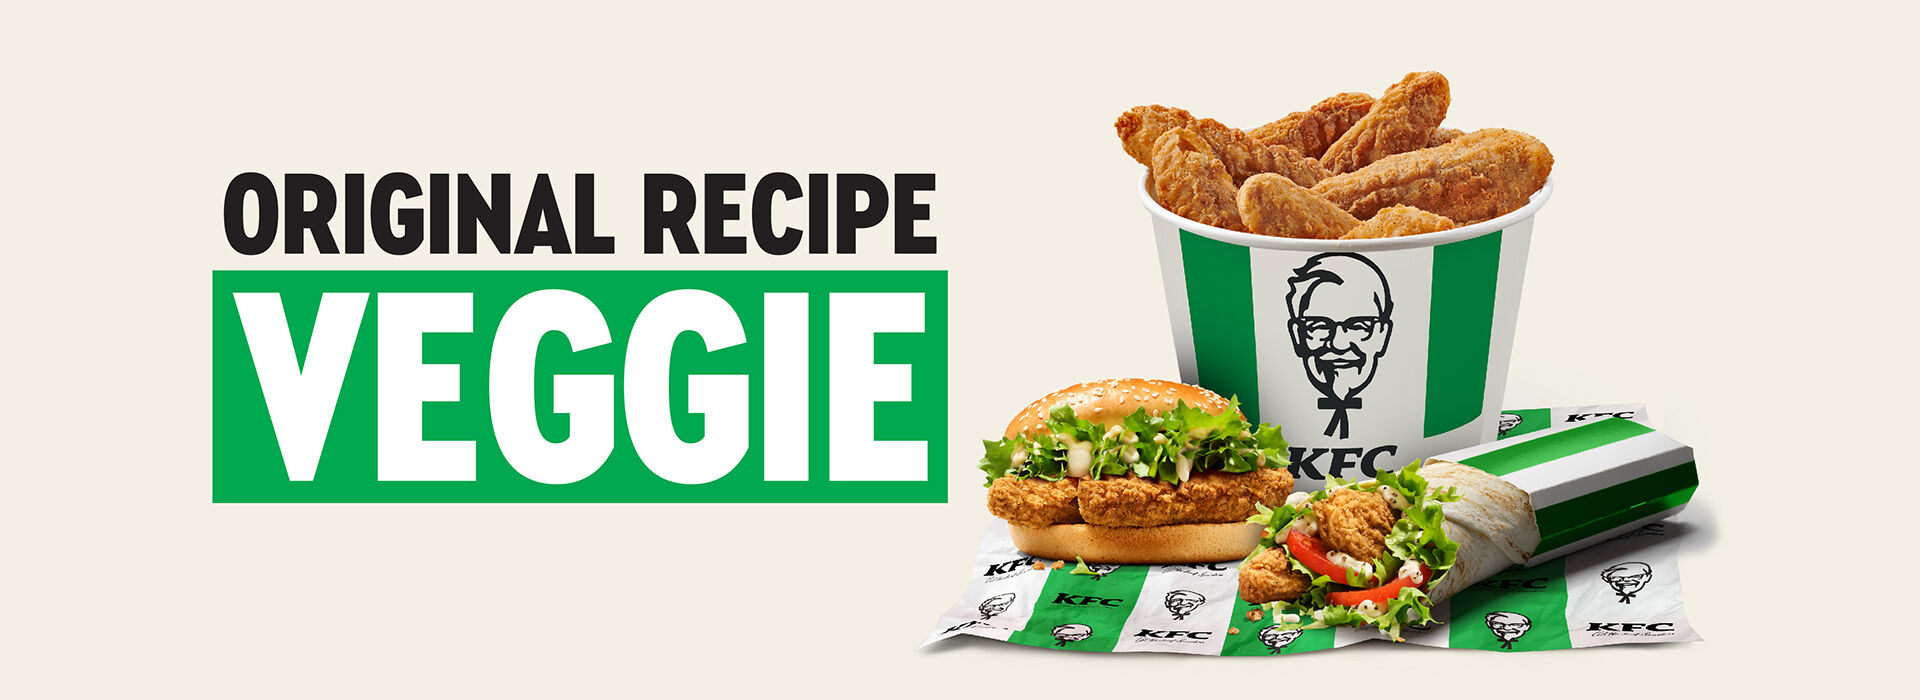 New VEGGIE menu at KFC